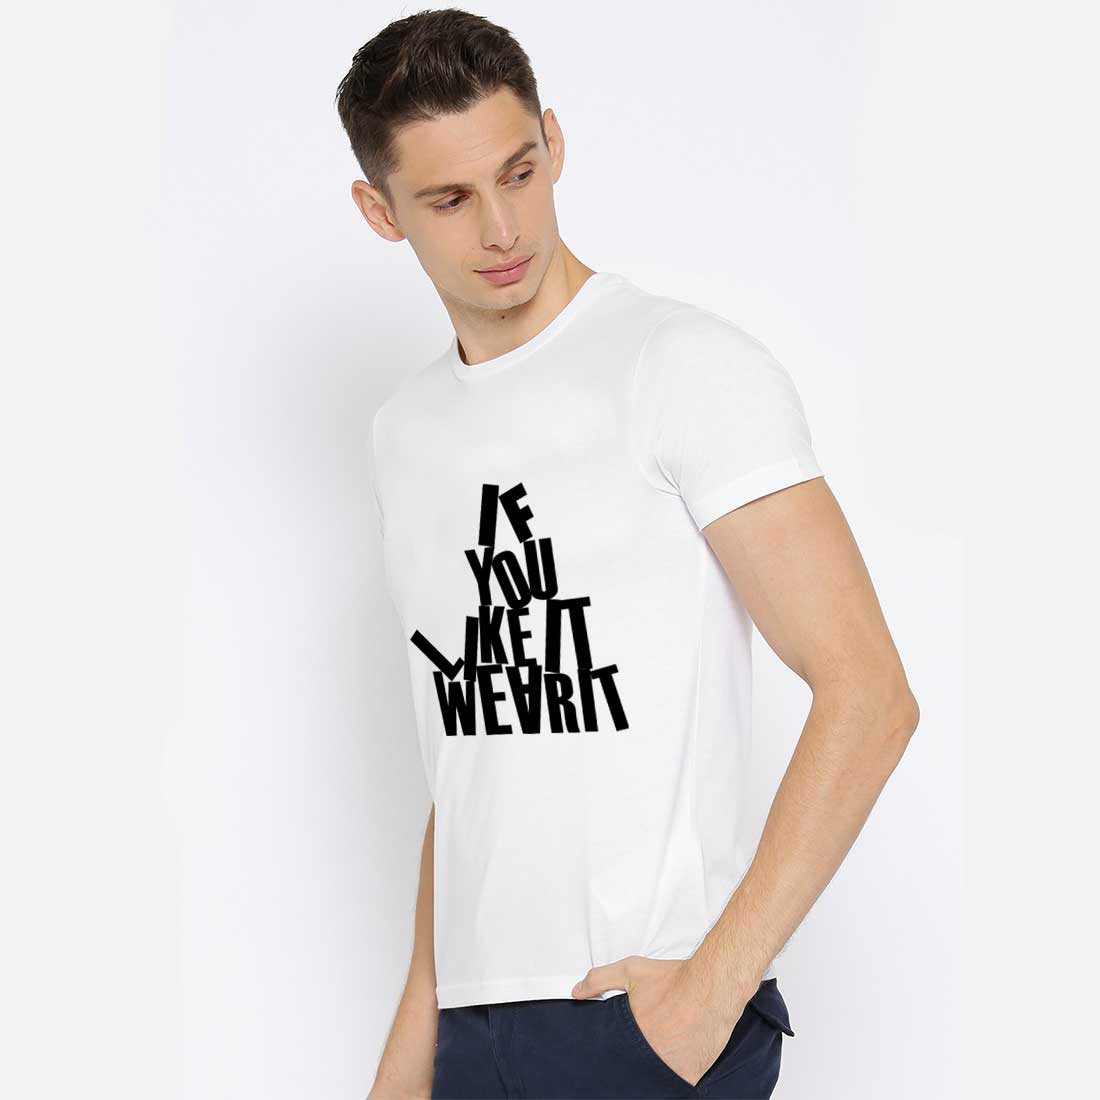 If You like It White Men T-Shirt